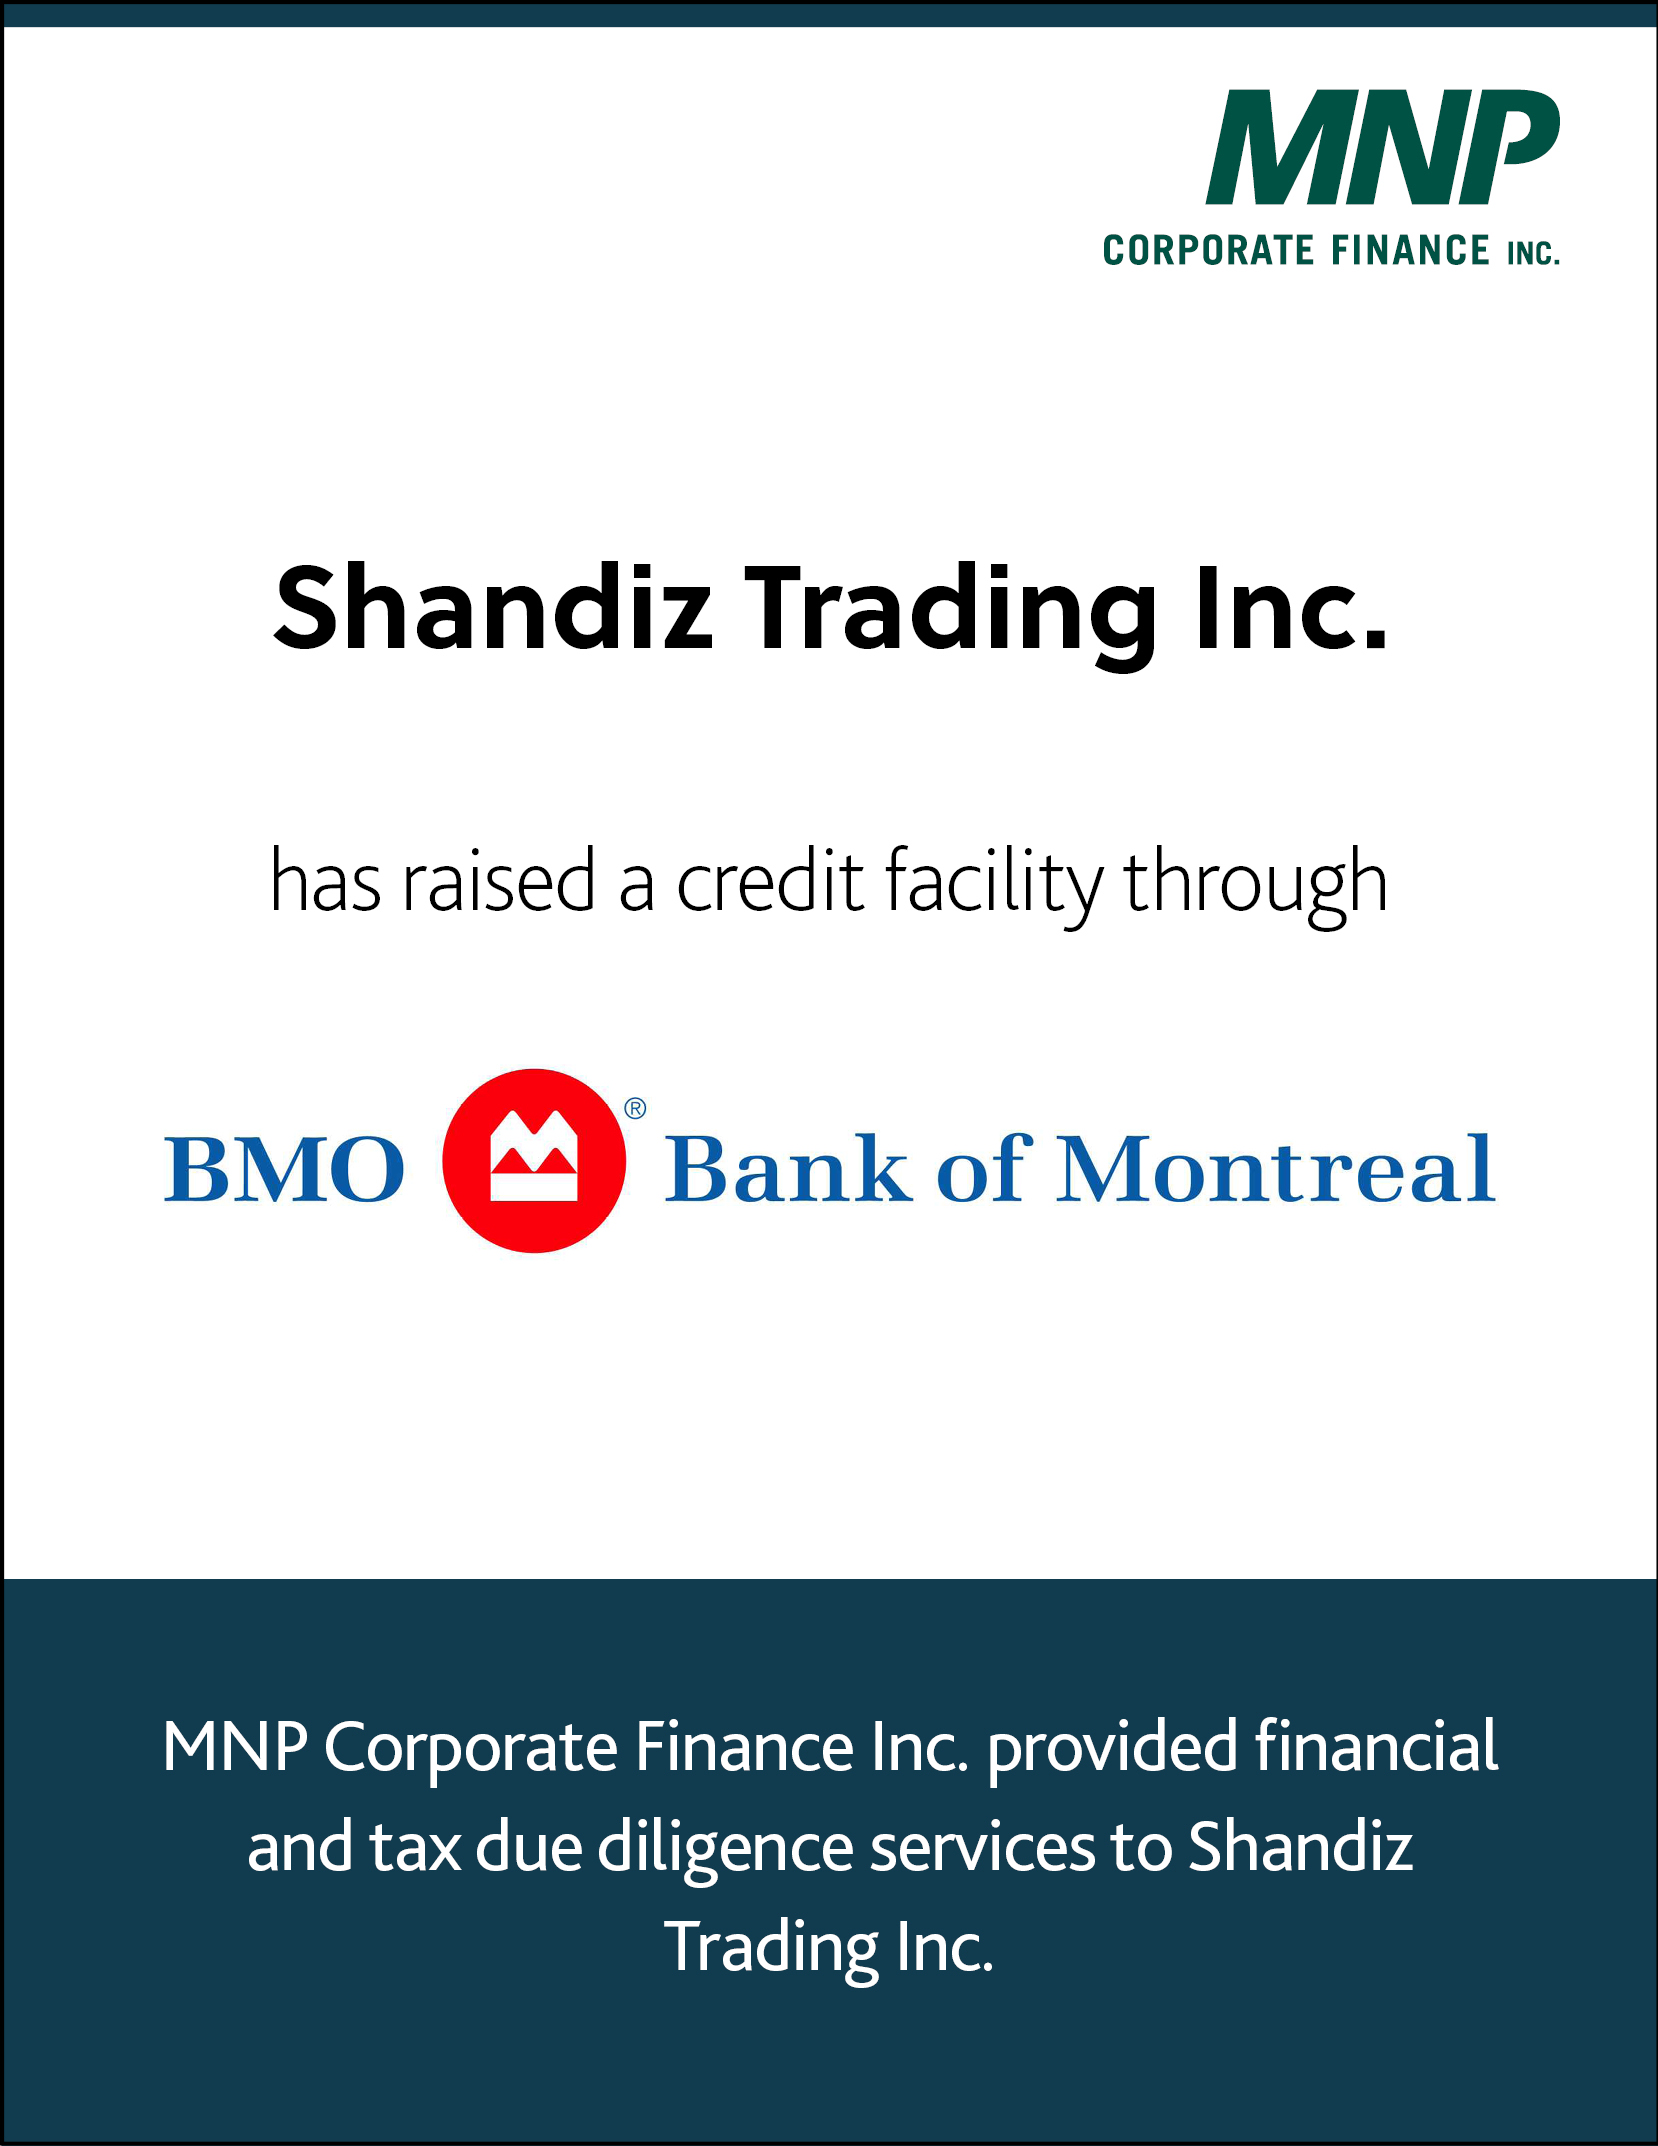 Shandiz Trading Inc has raised a credit facility through BMO Bank of Montreal